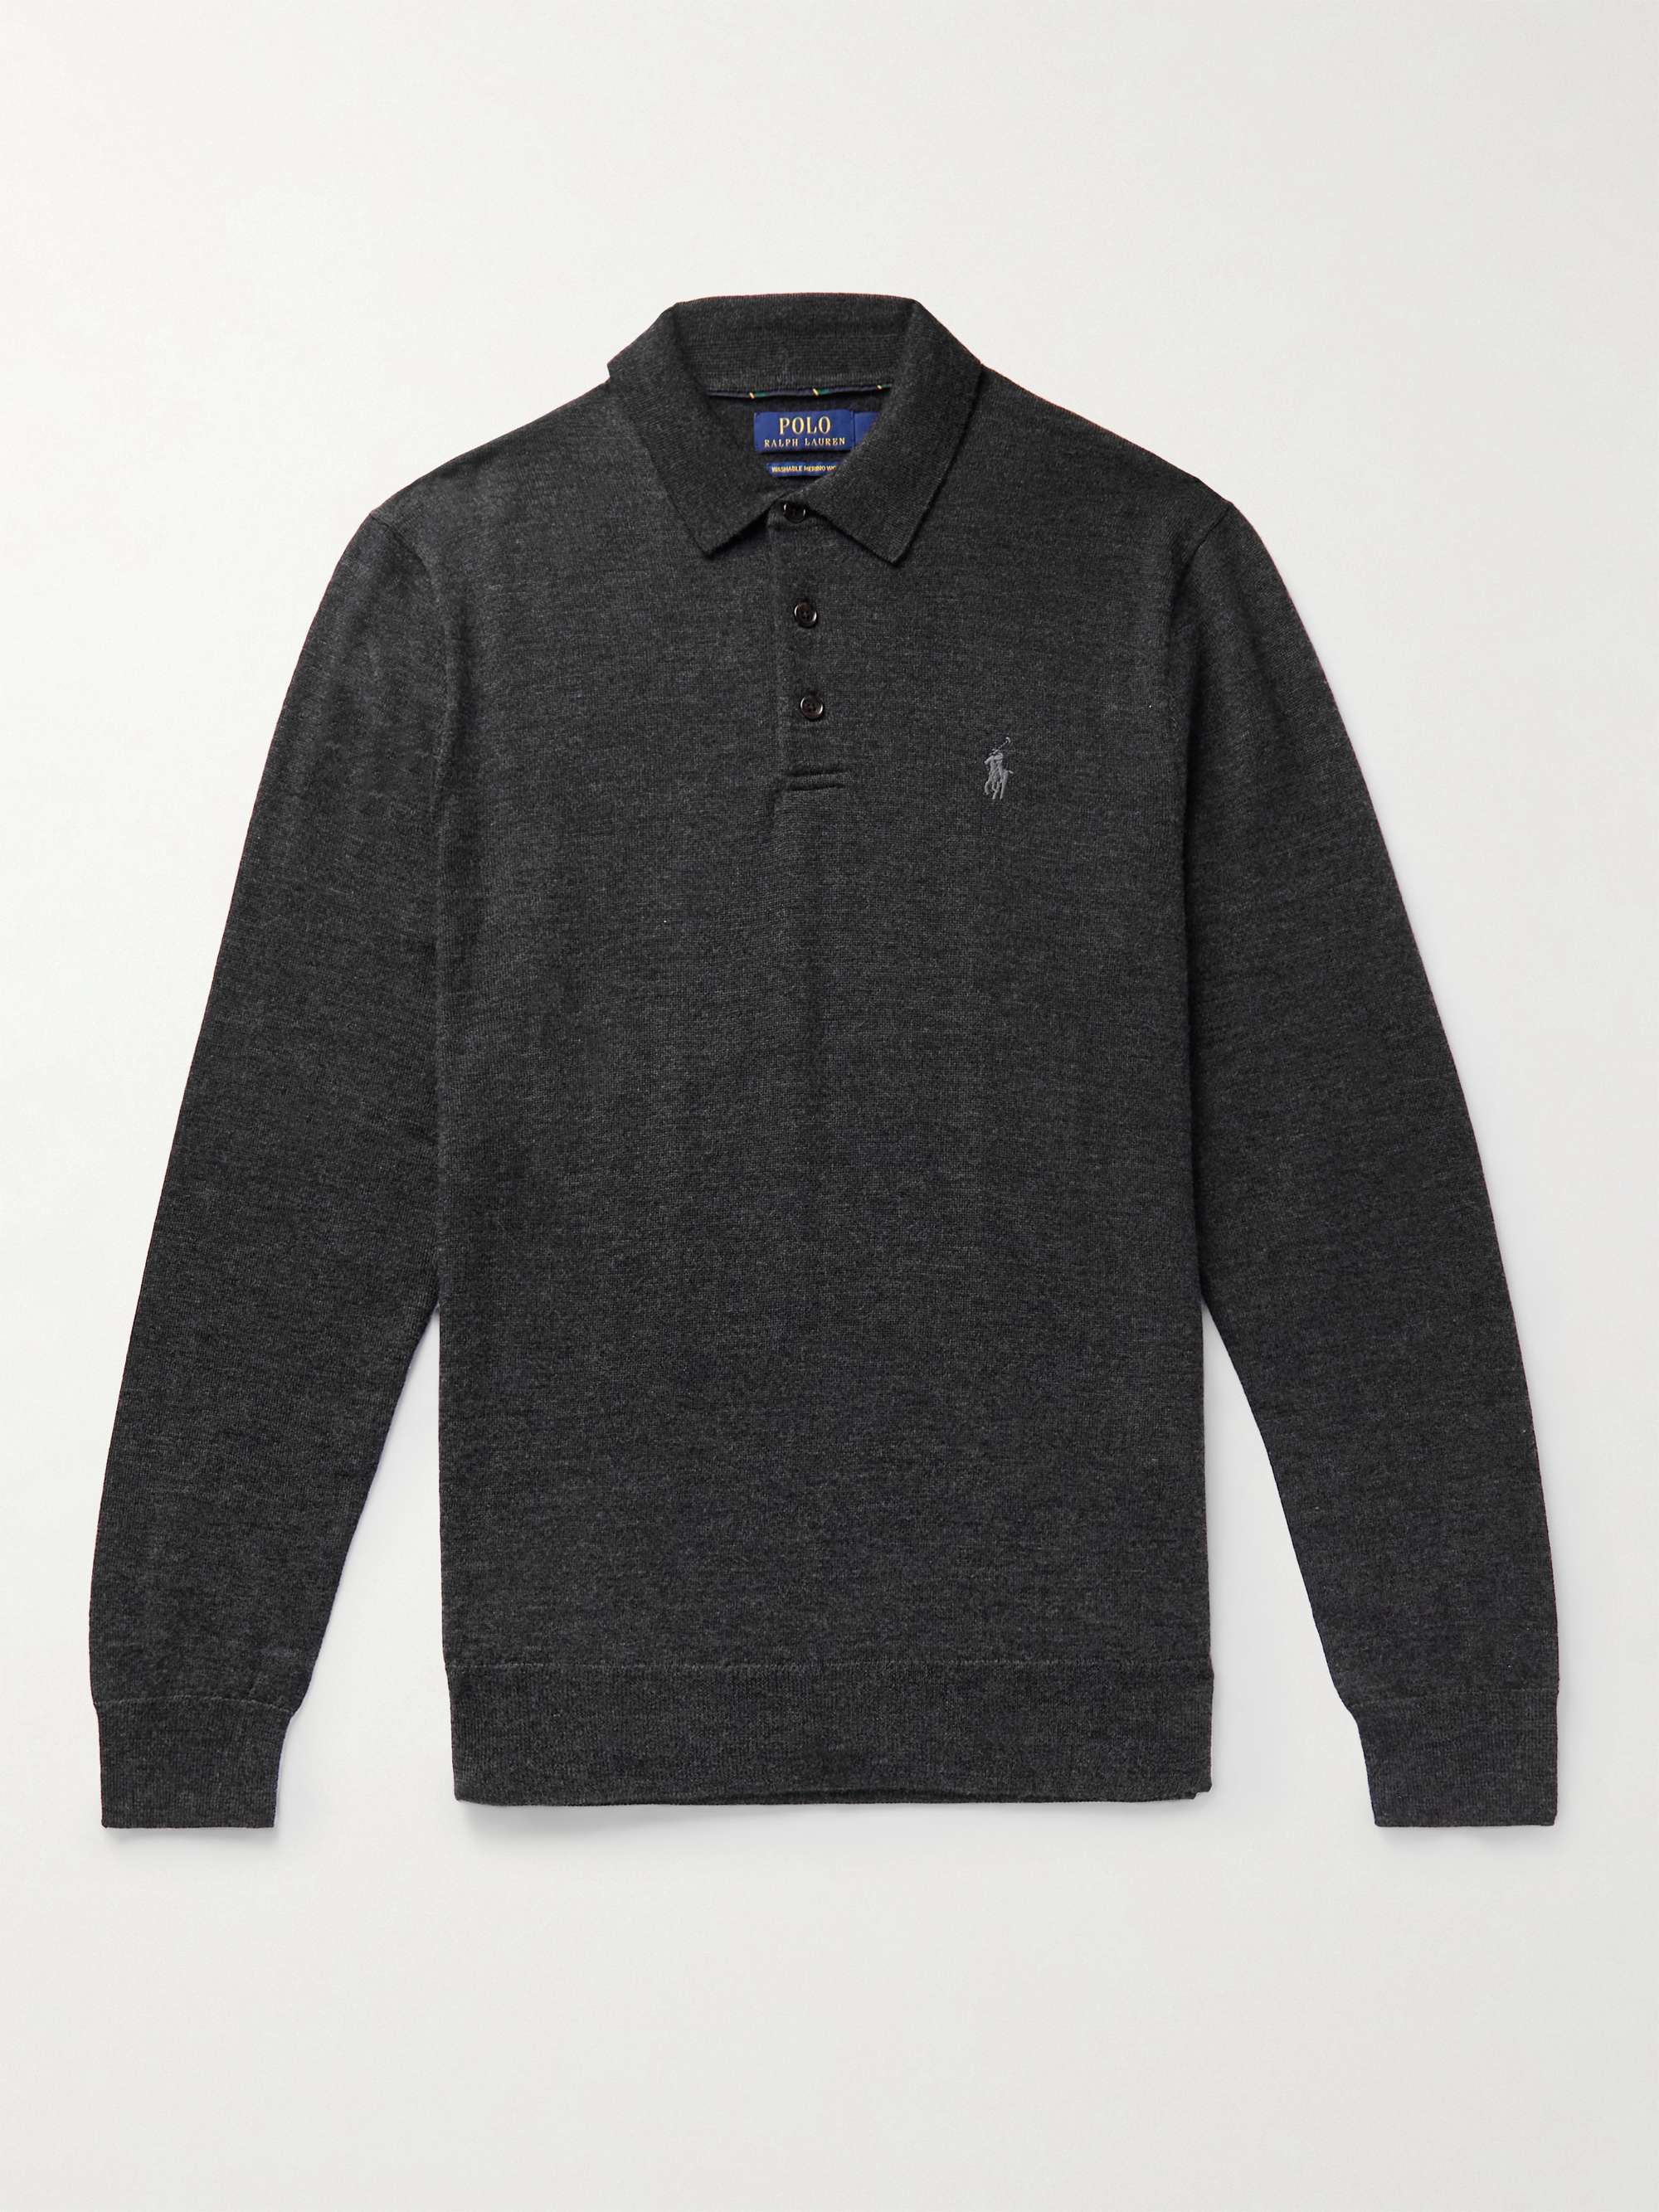 Dark gray Logo-Embroidered Wool Polo Shirt | POLO RALPH LAUREN | MR PORTER